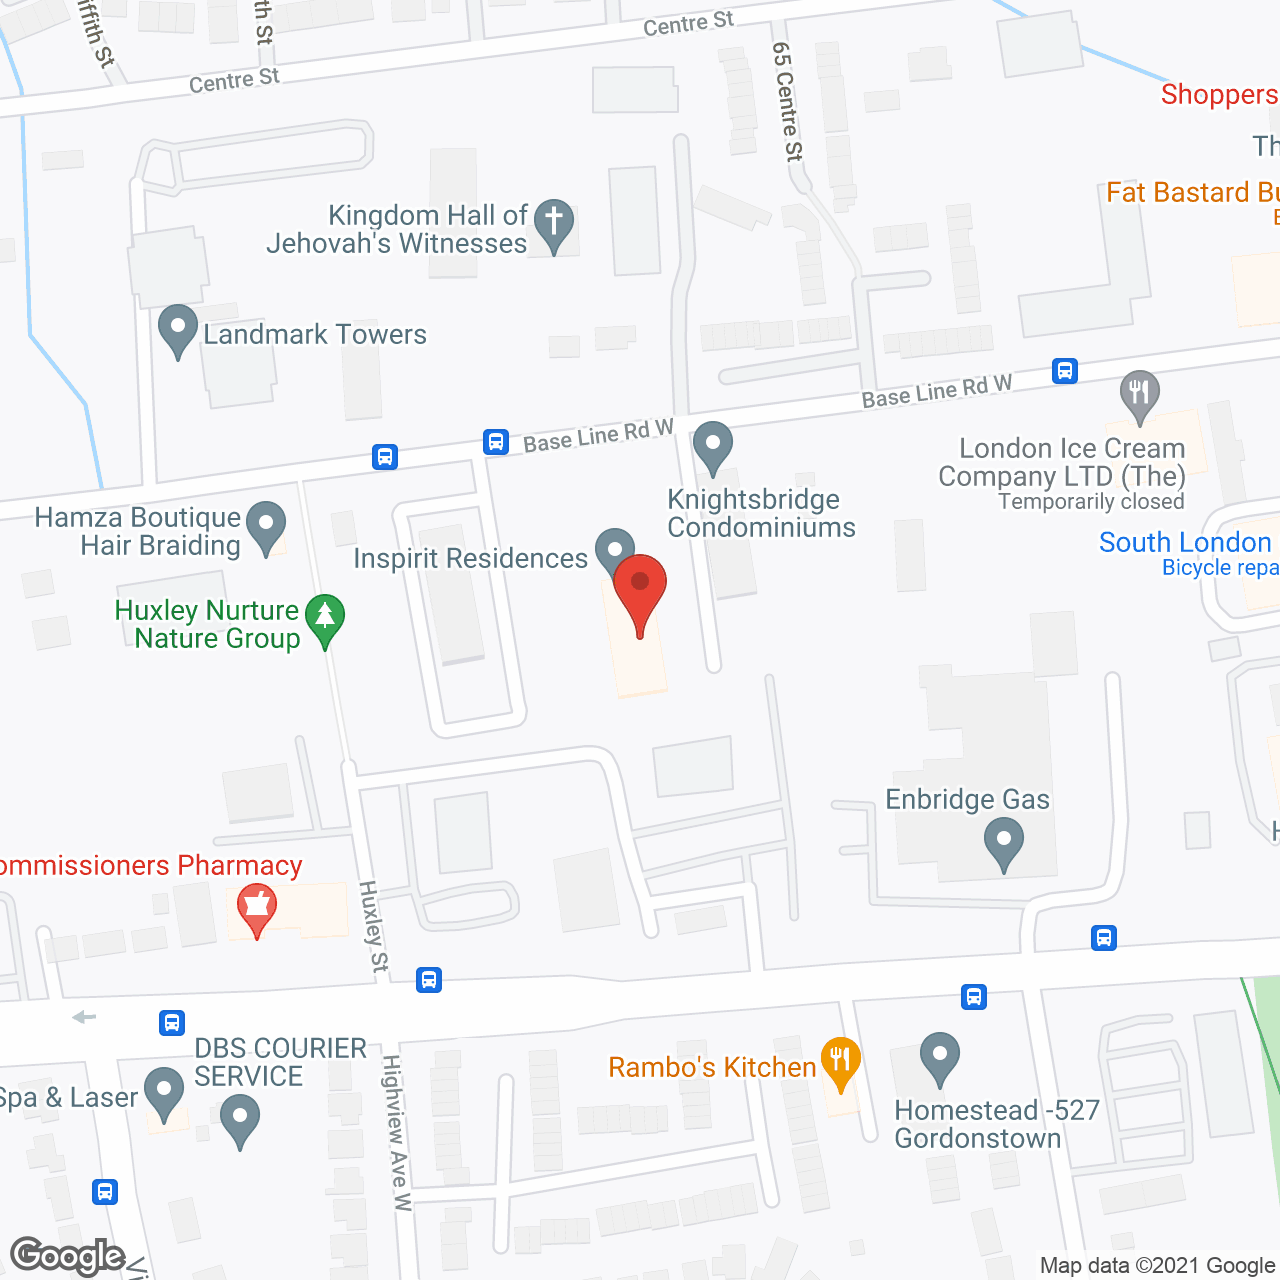 Inspirit Residences in google map